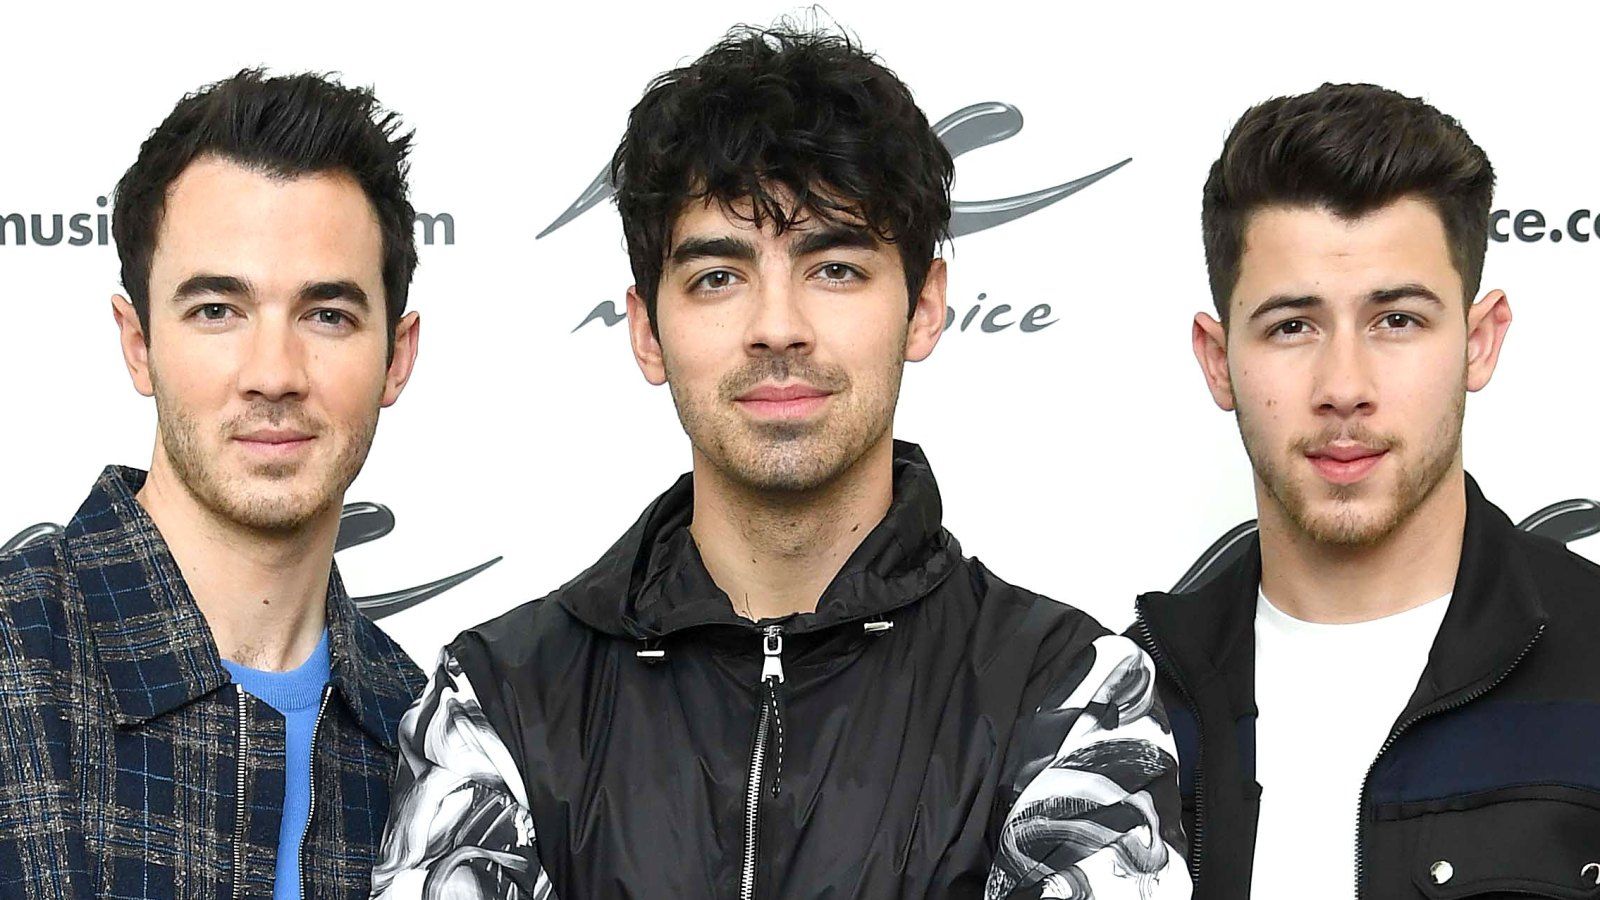 Jonas Brothers Relationship Was Not 'Healthy' Ahead of Split